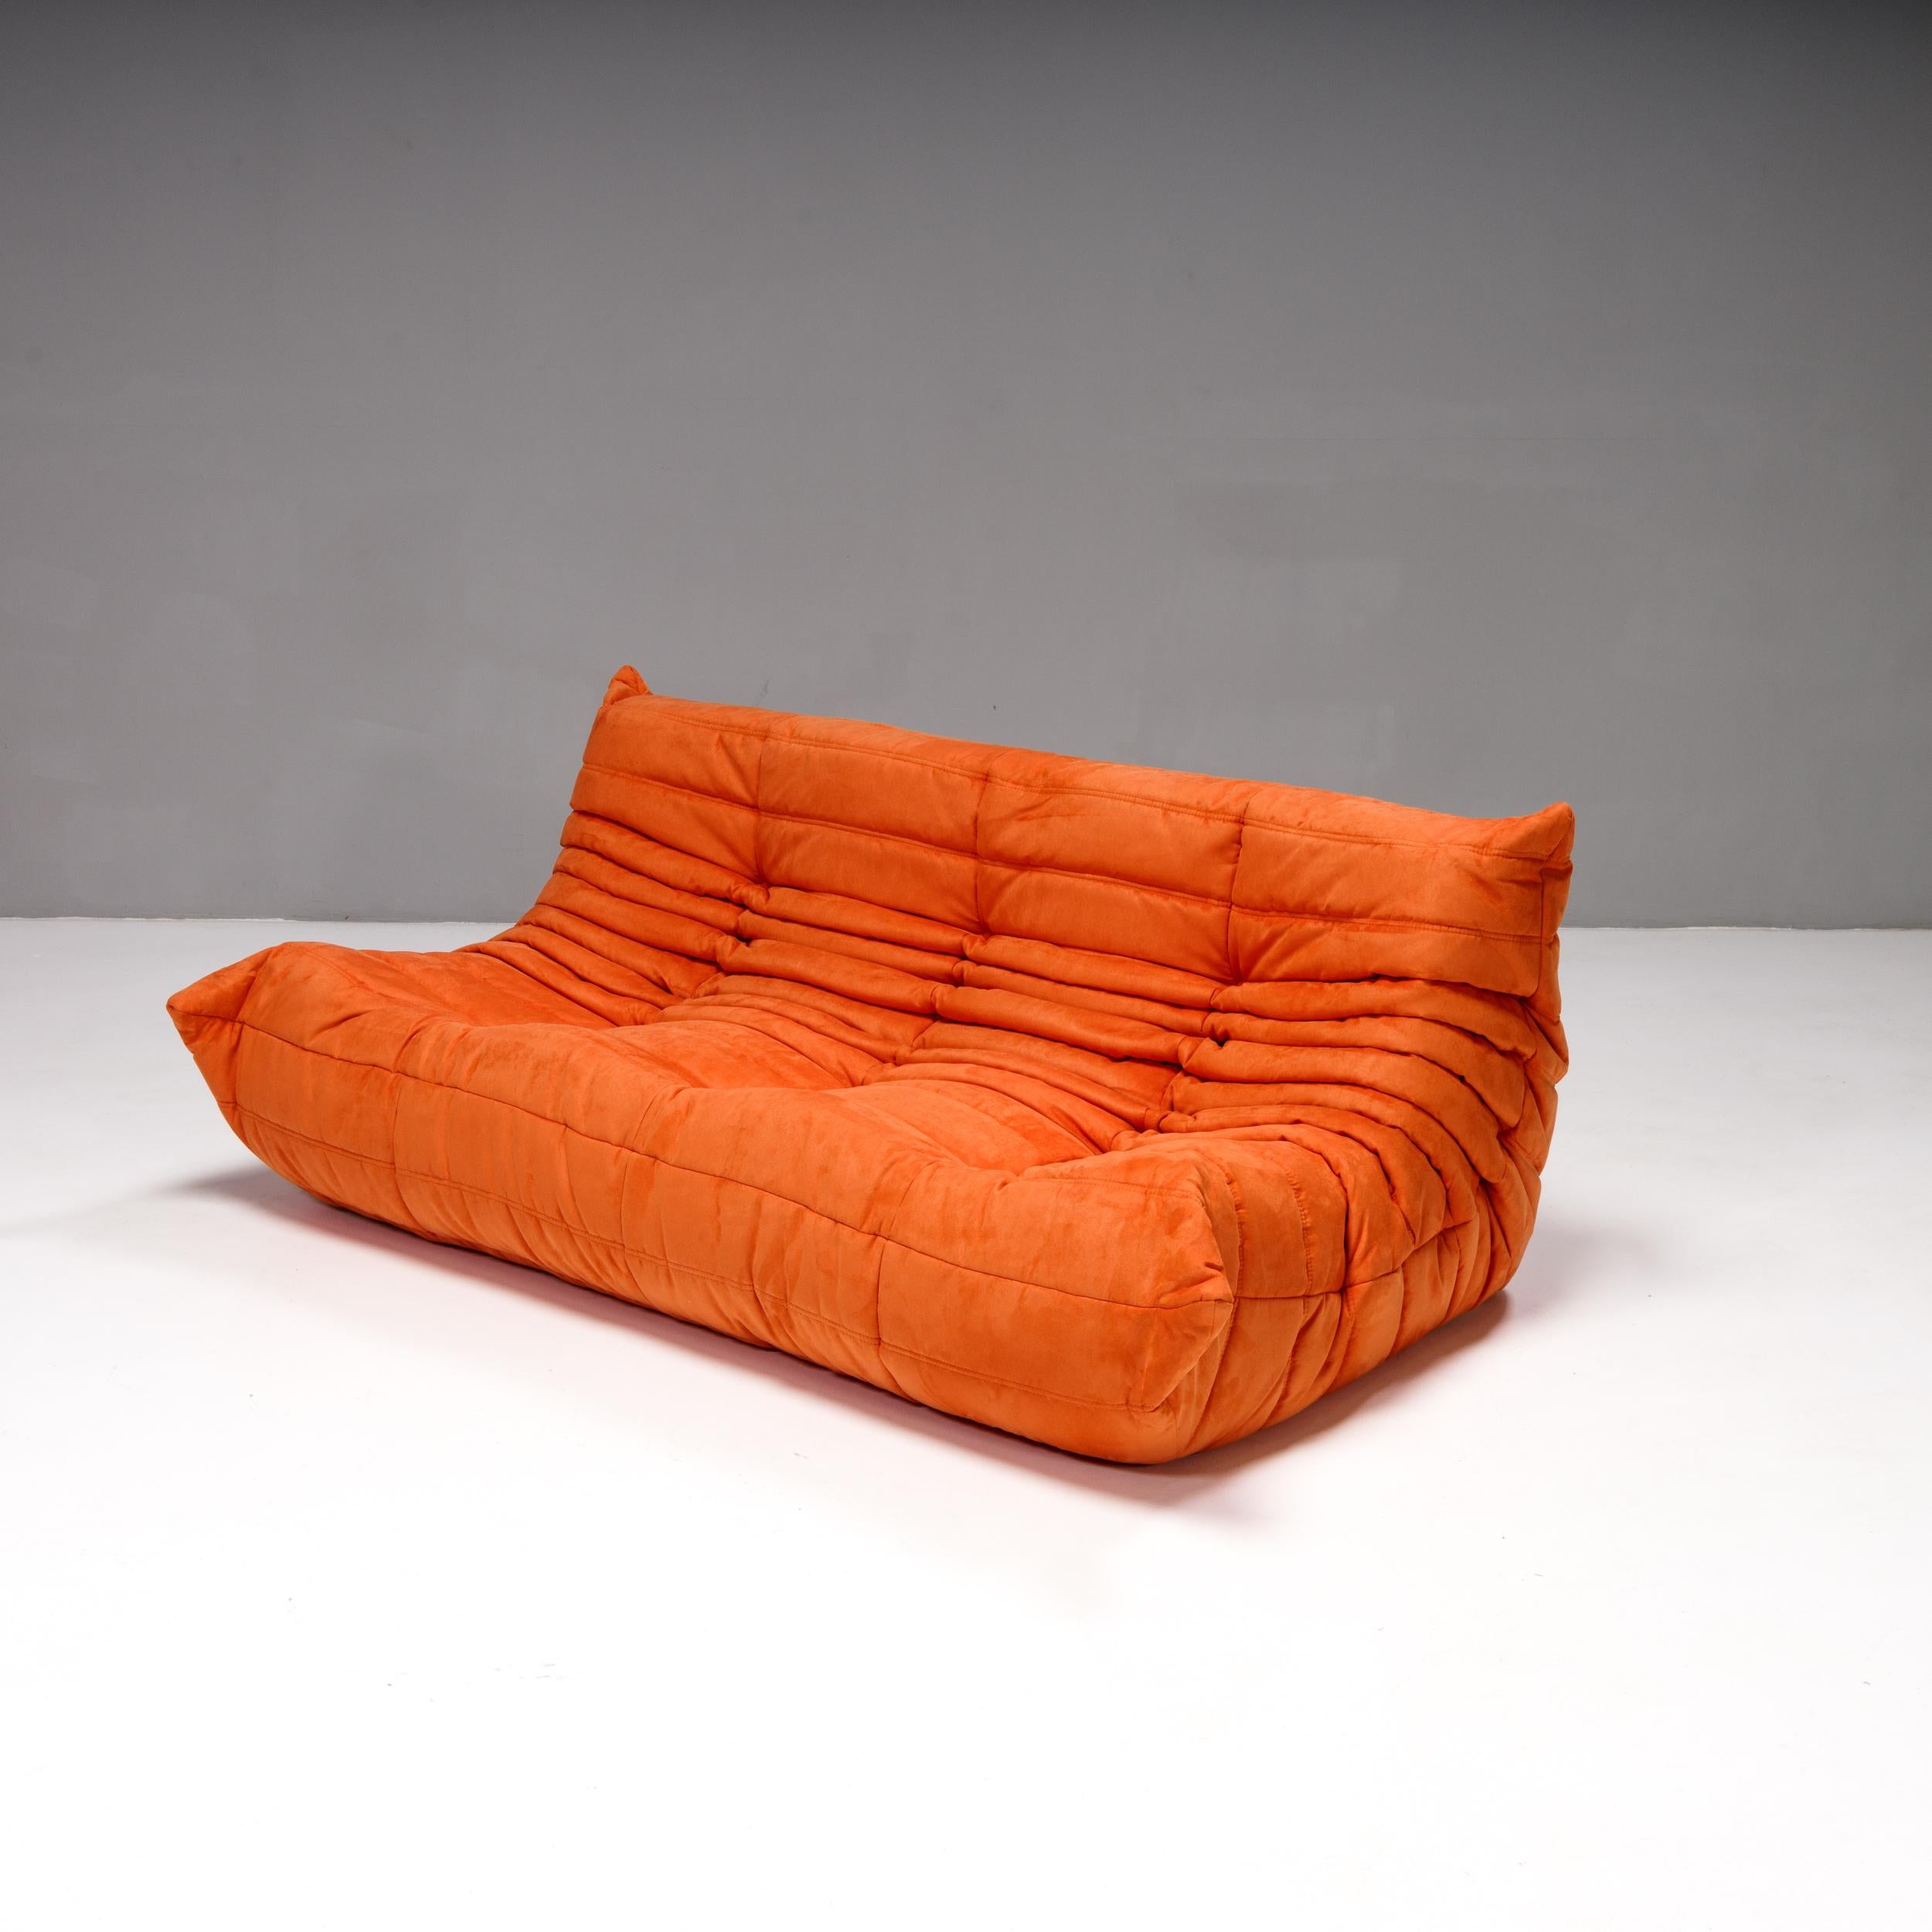 Michel Ducaroy for Ligne Roset Orange Togo Modular Sofas, Set of 5 For Sale 2